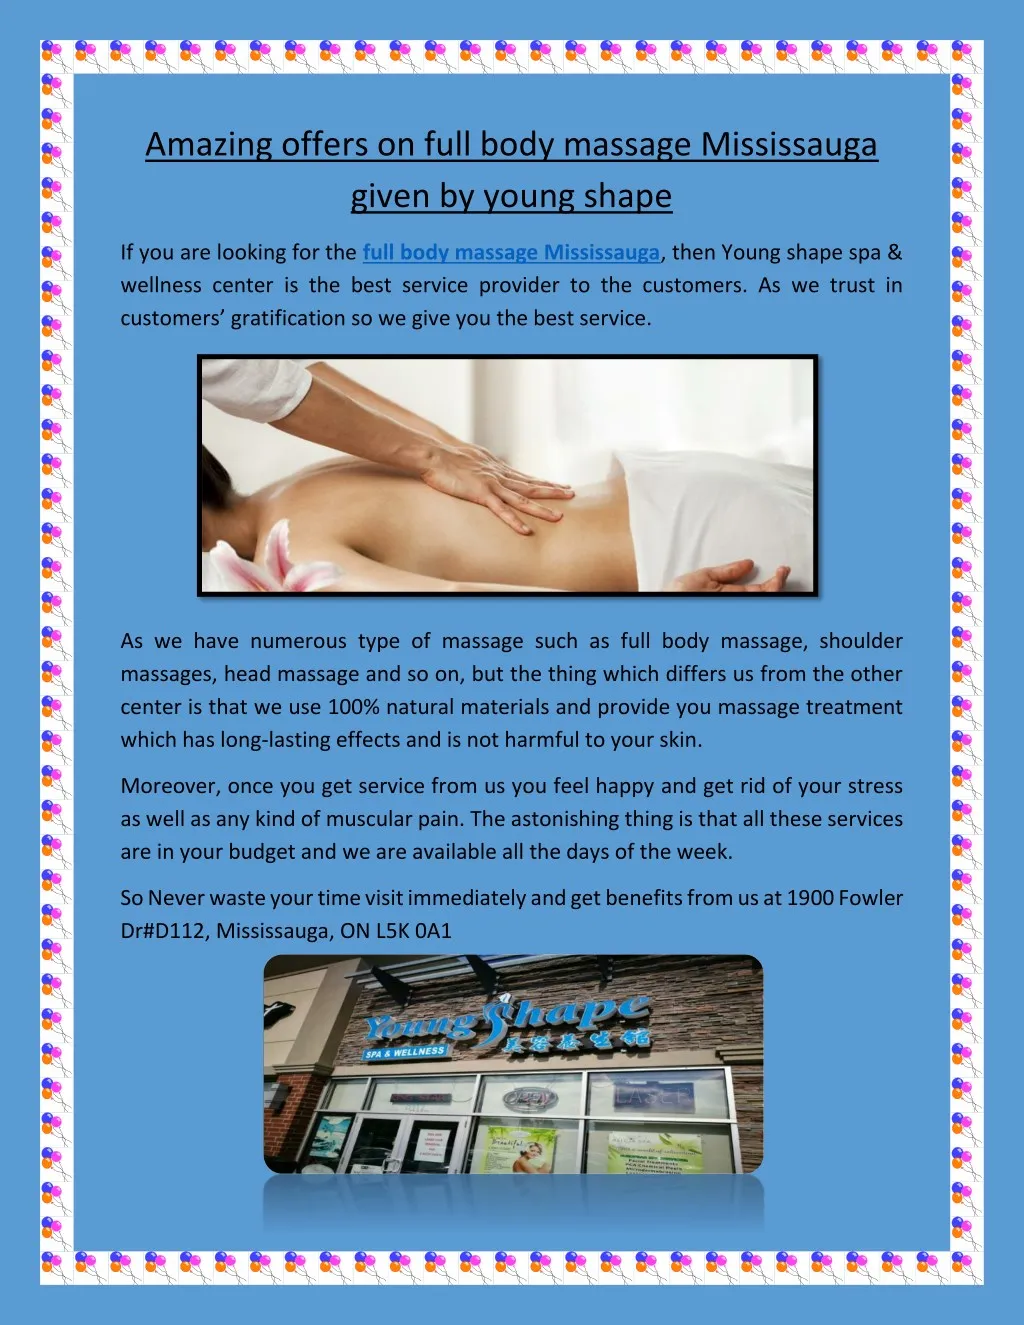 amazing offers on full body massage mississauga